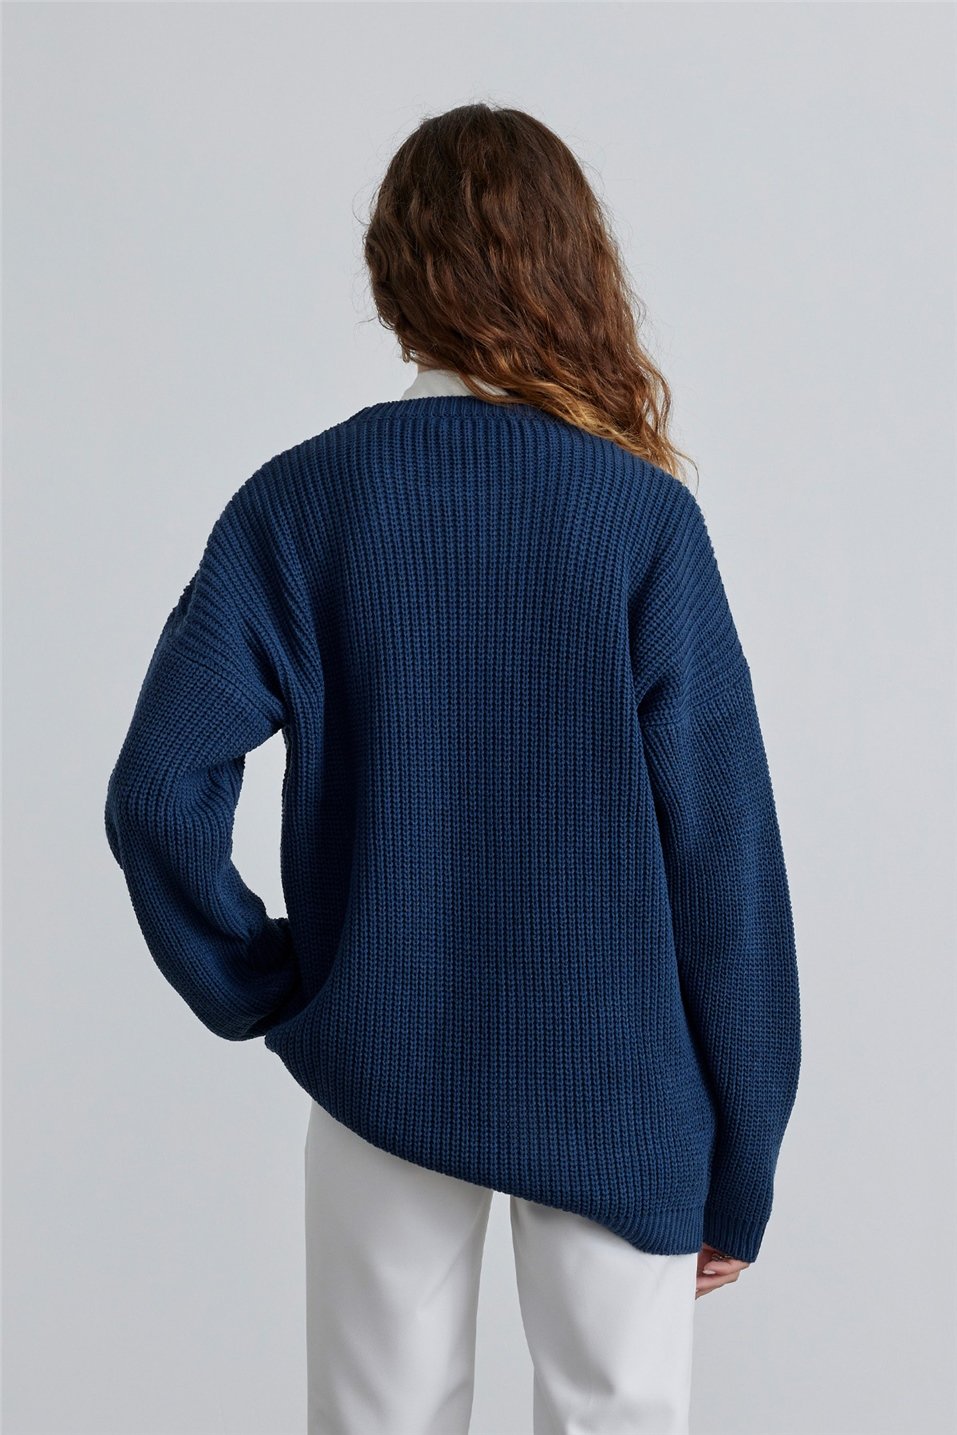 Indigo Oversize Knitwear Sweatshirt